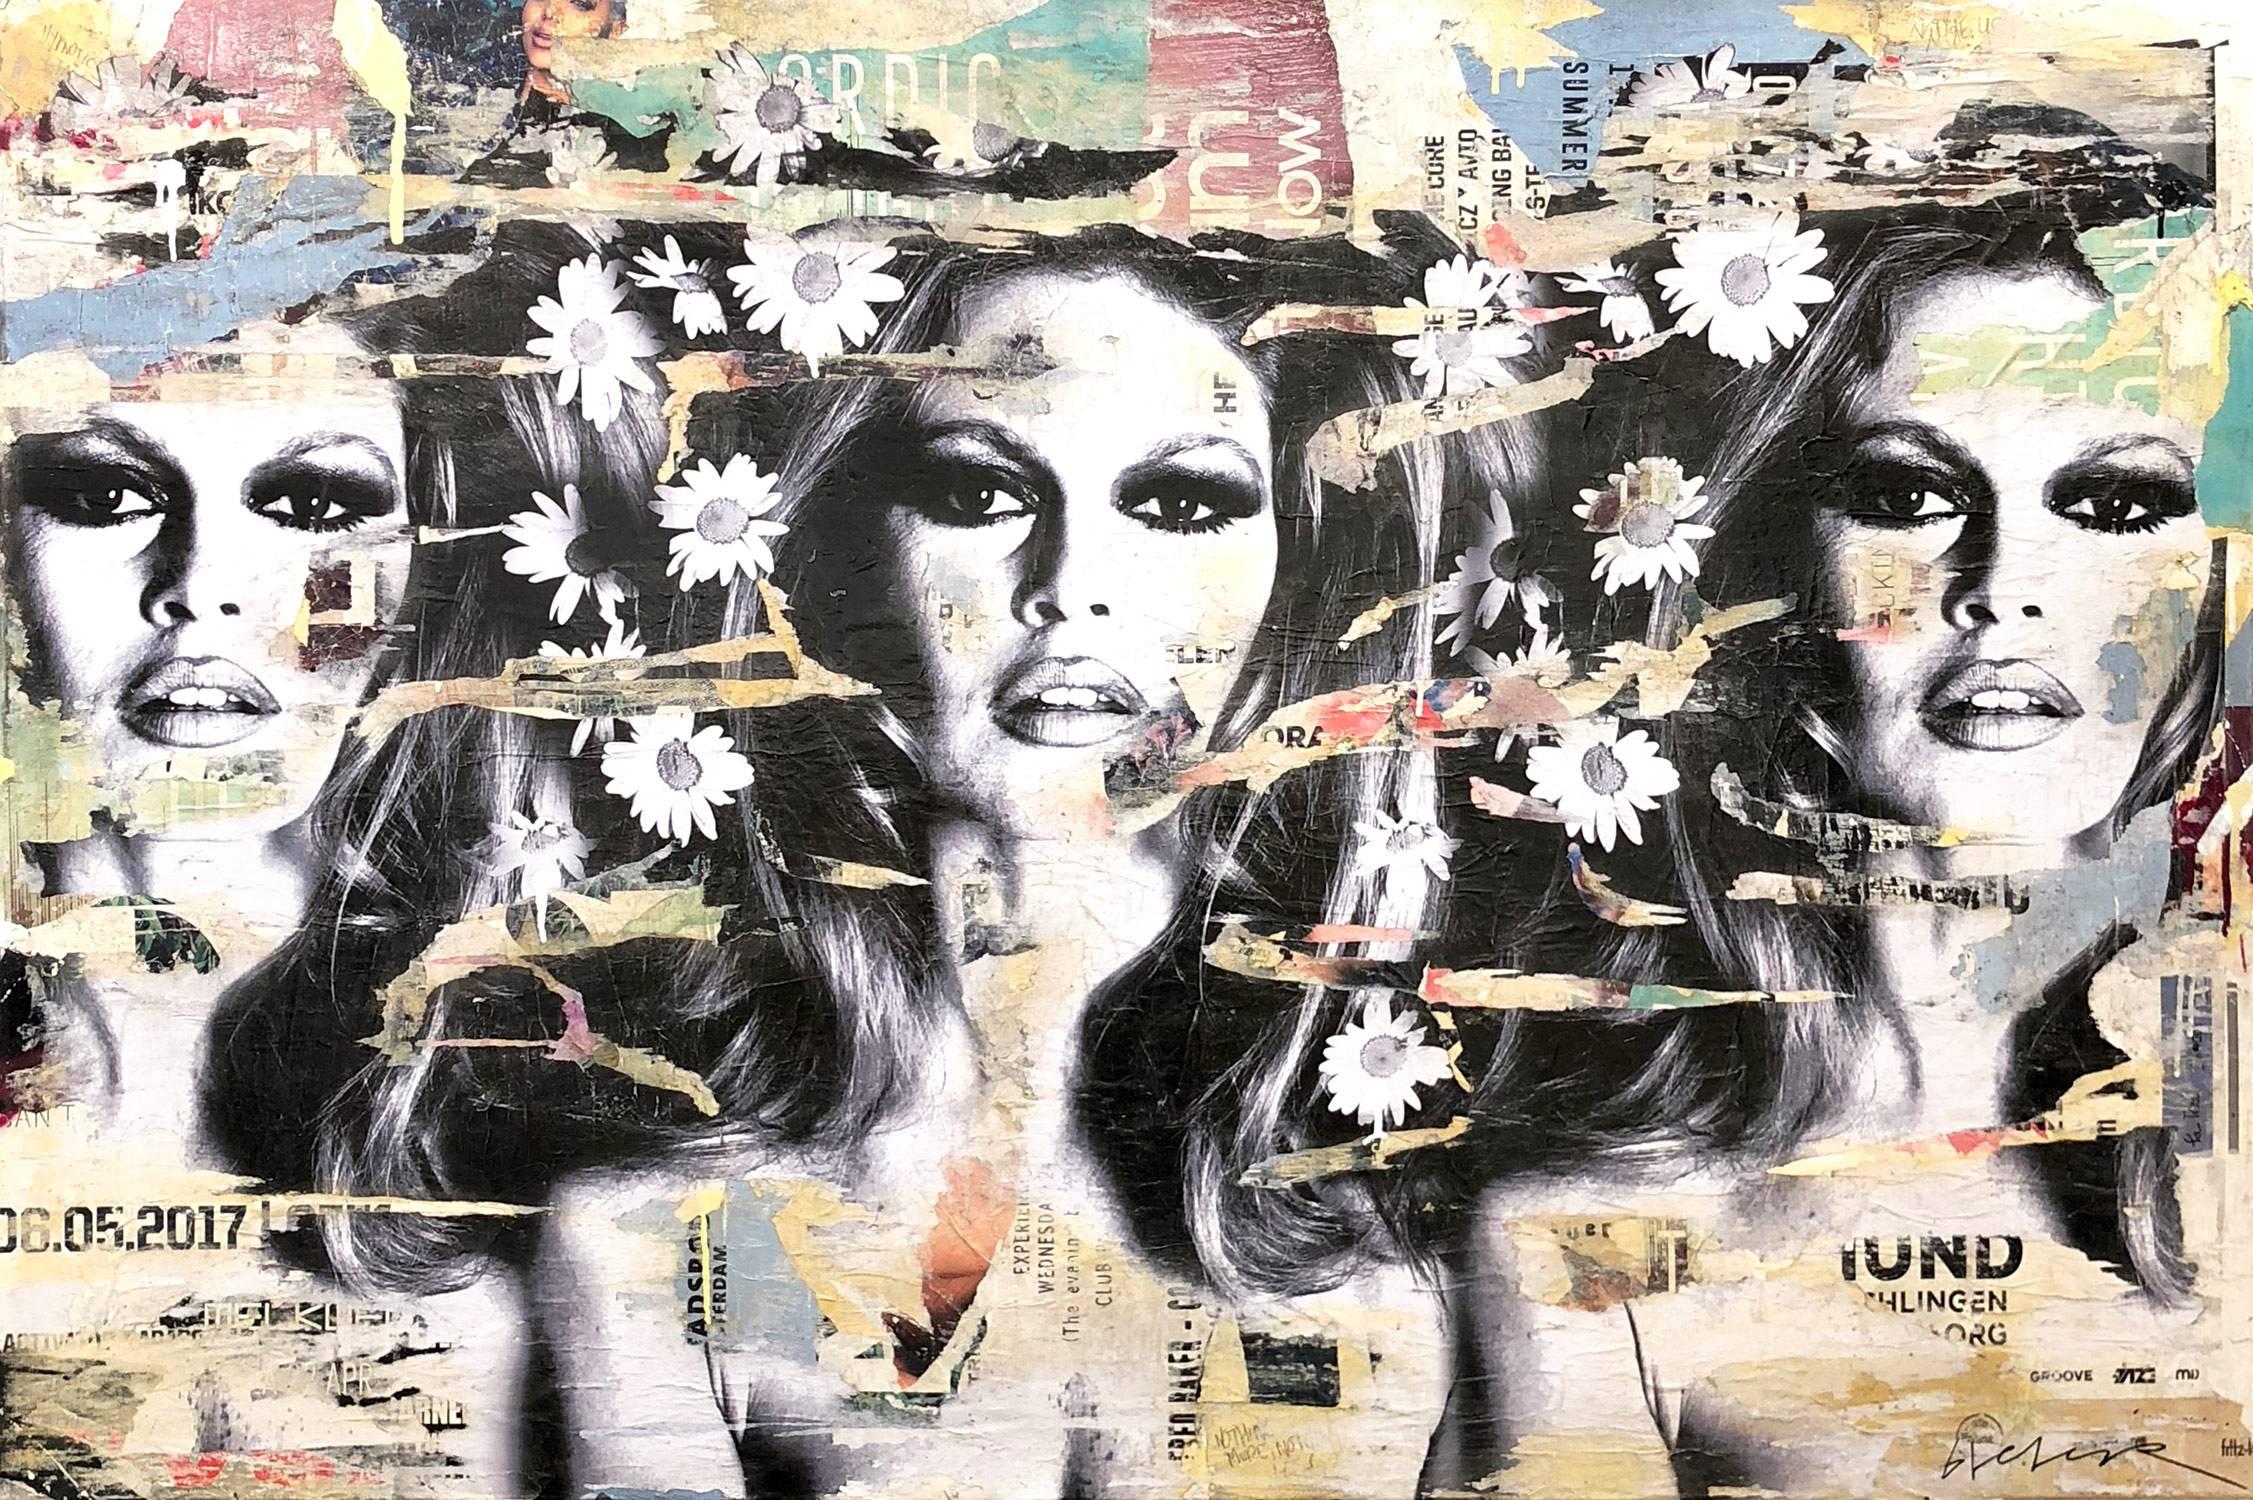 Gieler Abstract Painting - "We're Your Friends" Portrait of Brigitte Bardot Pop Art Street Art Painting